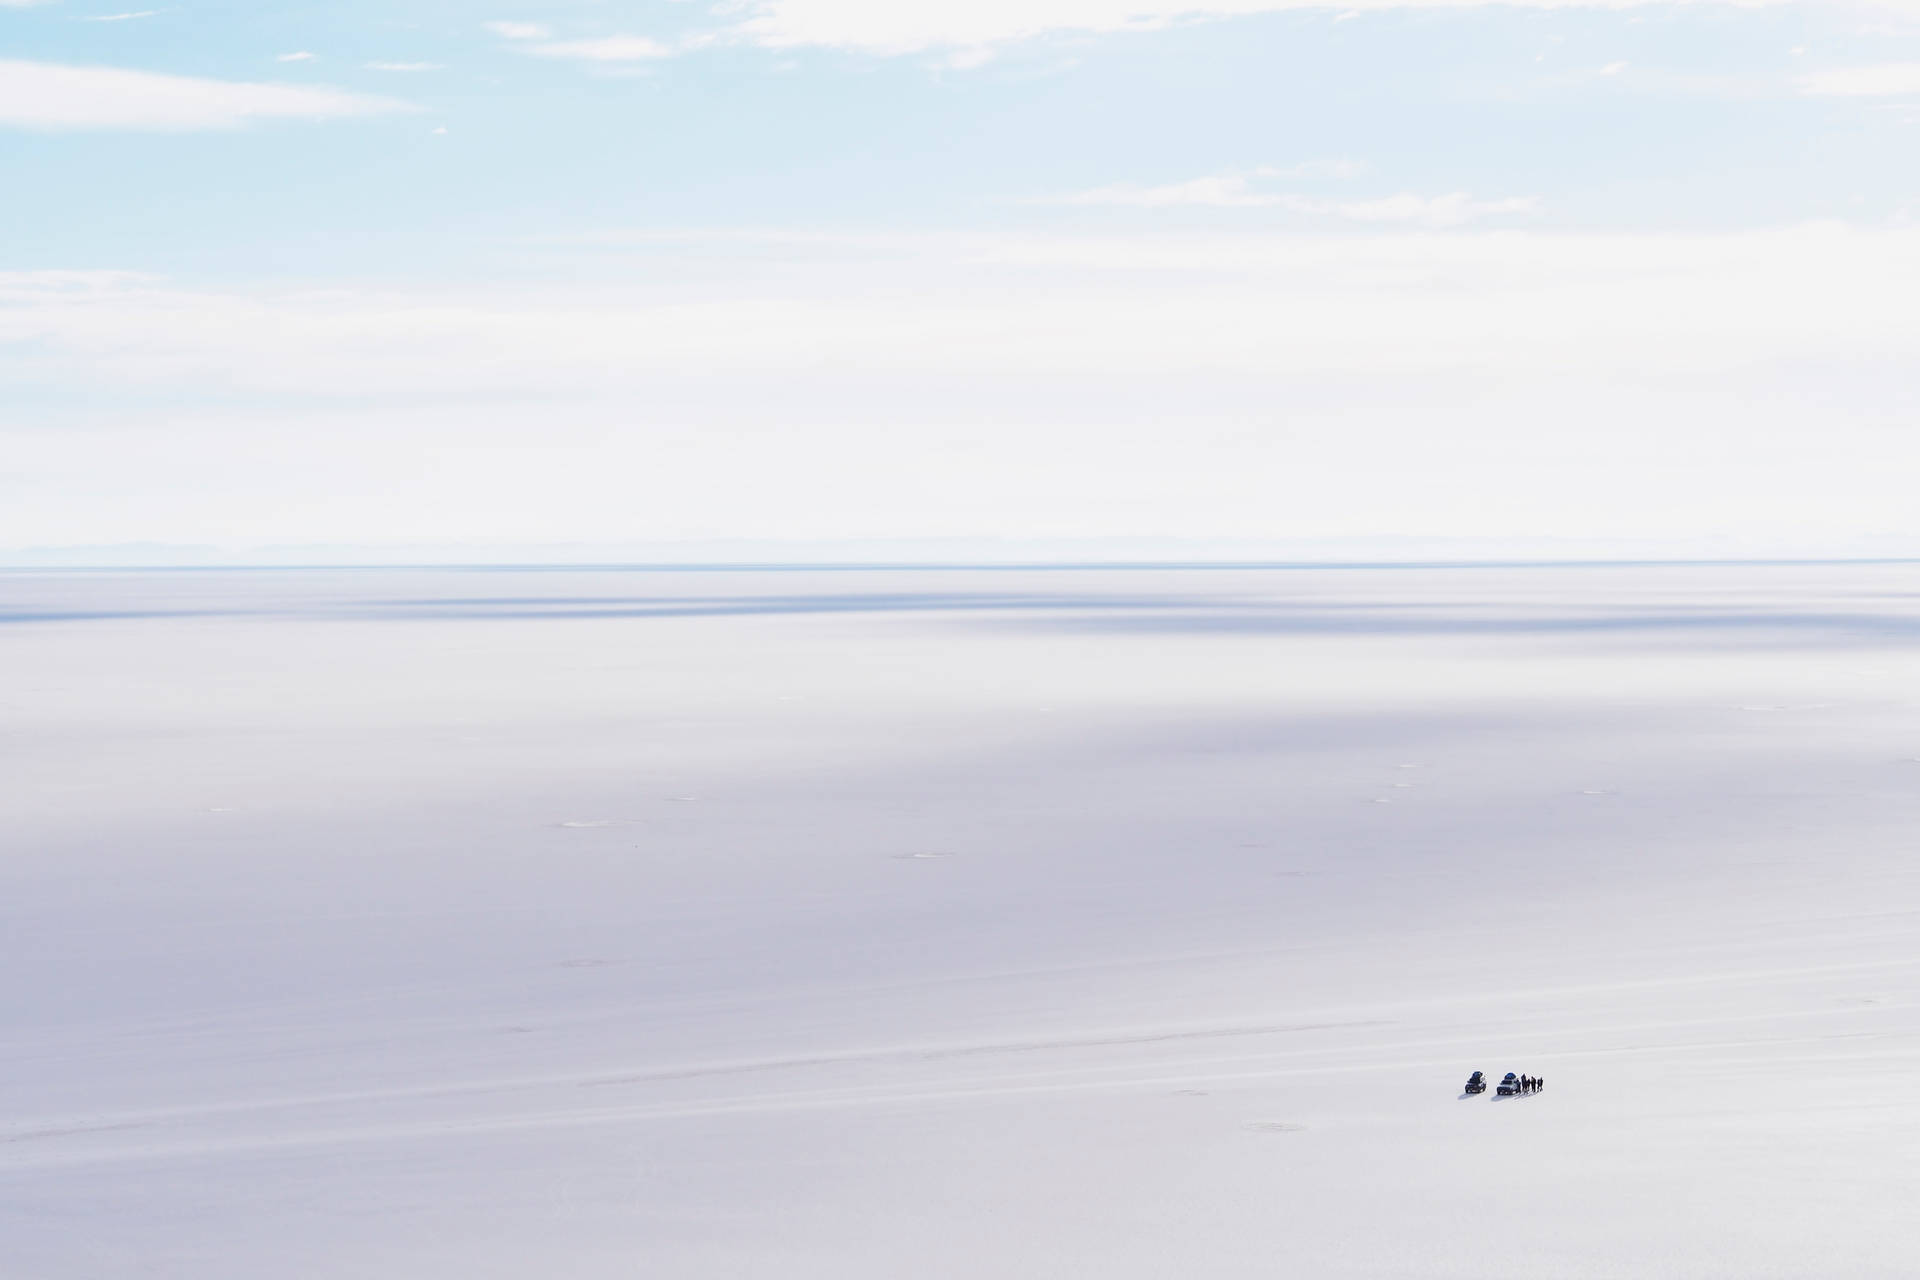 Bolivia Uyuni Salt Flats motiv. Wallpaper